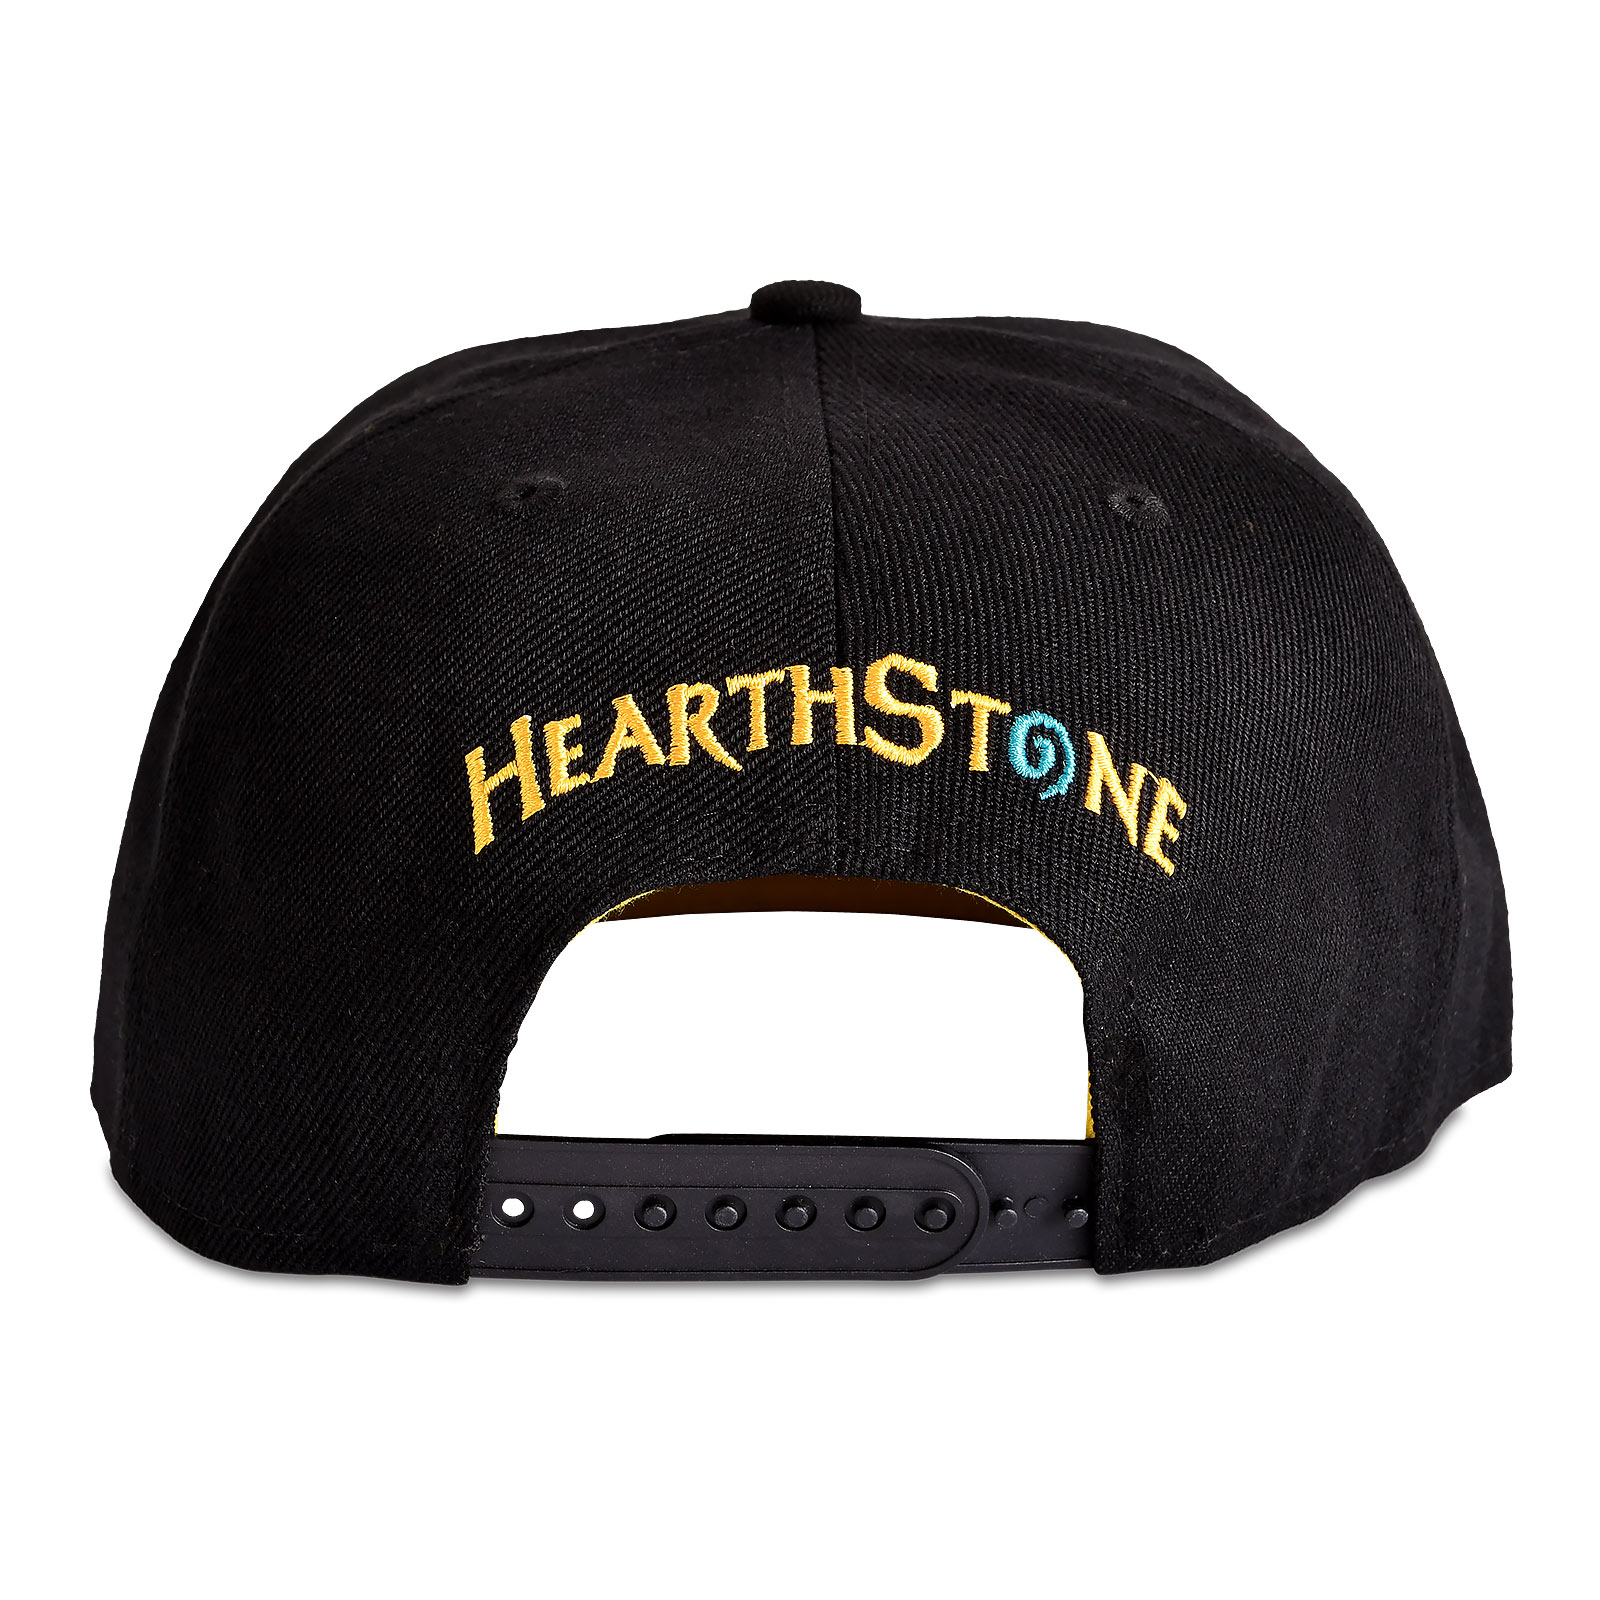 Hearthstone - Logo Snapback Cap schwarz